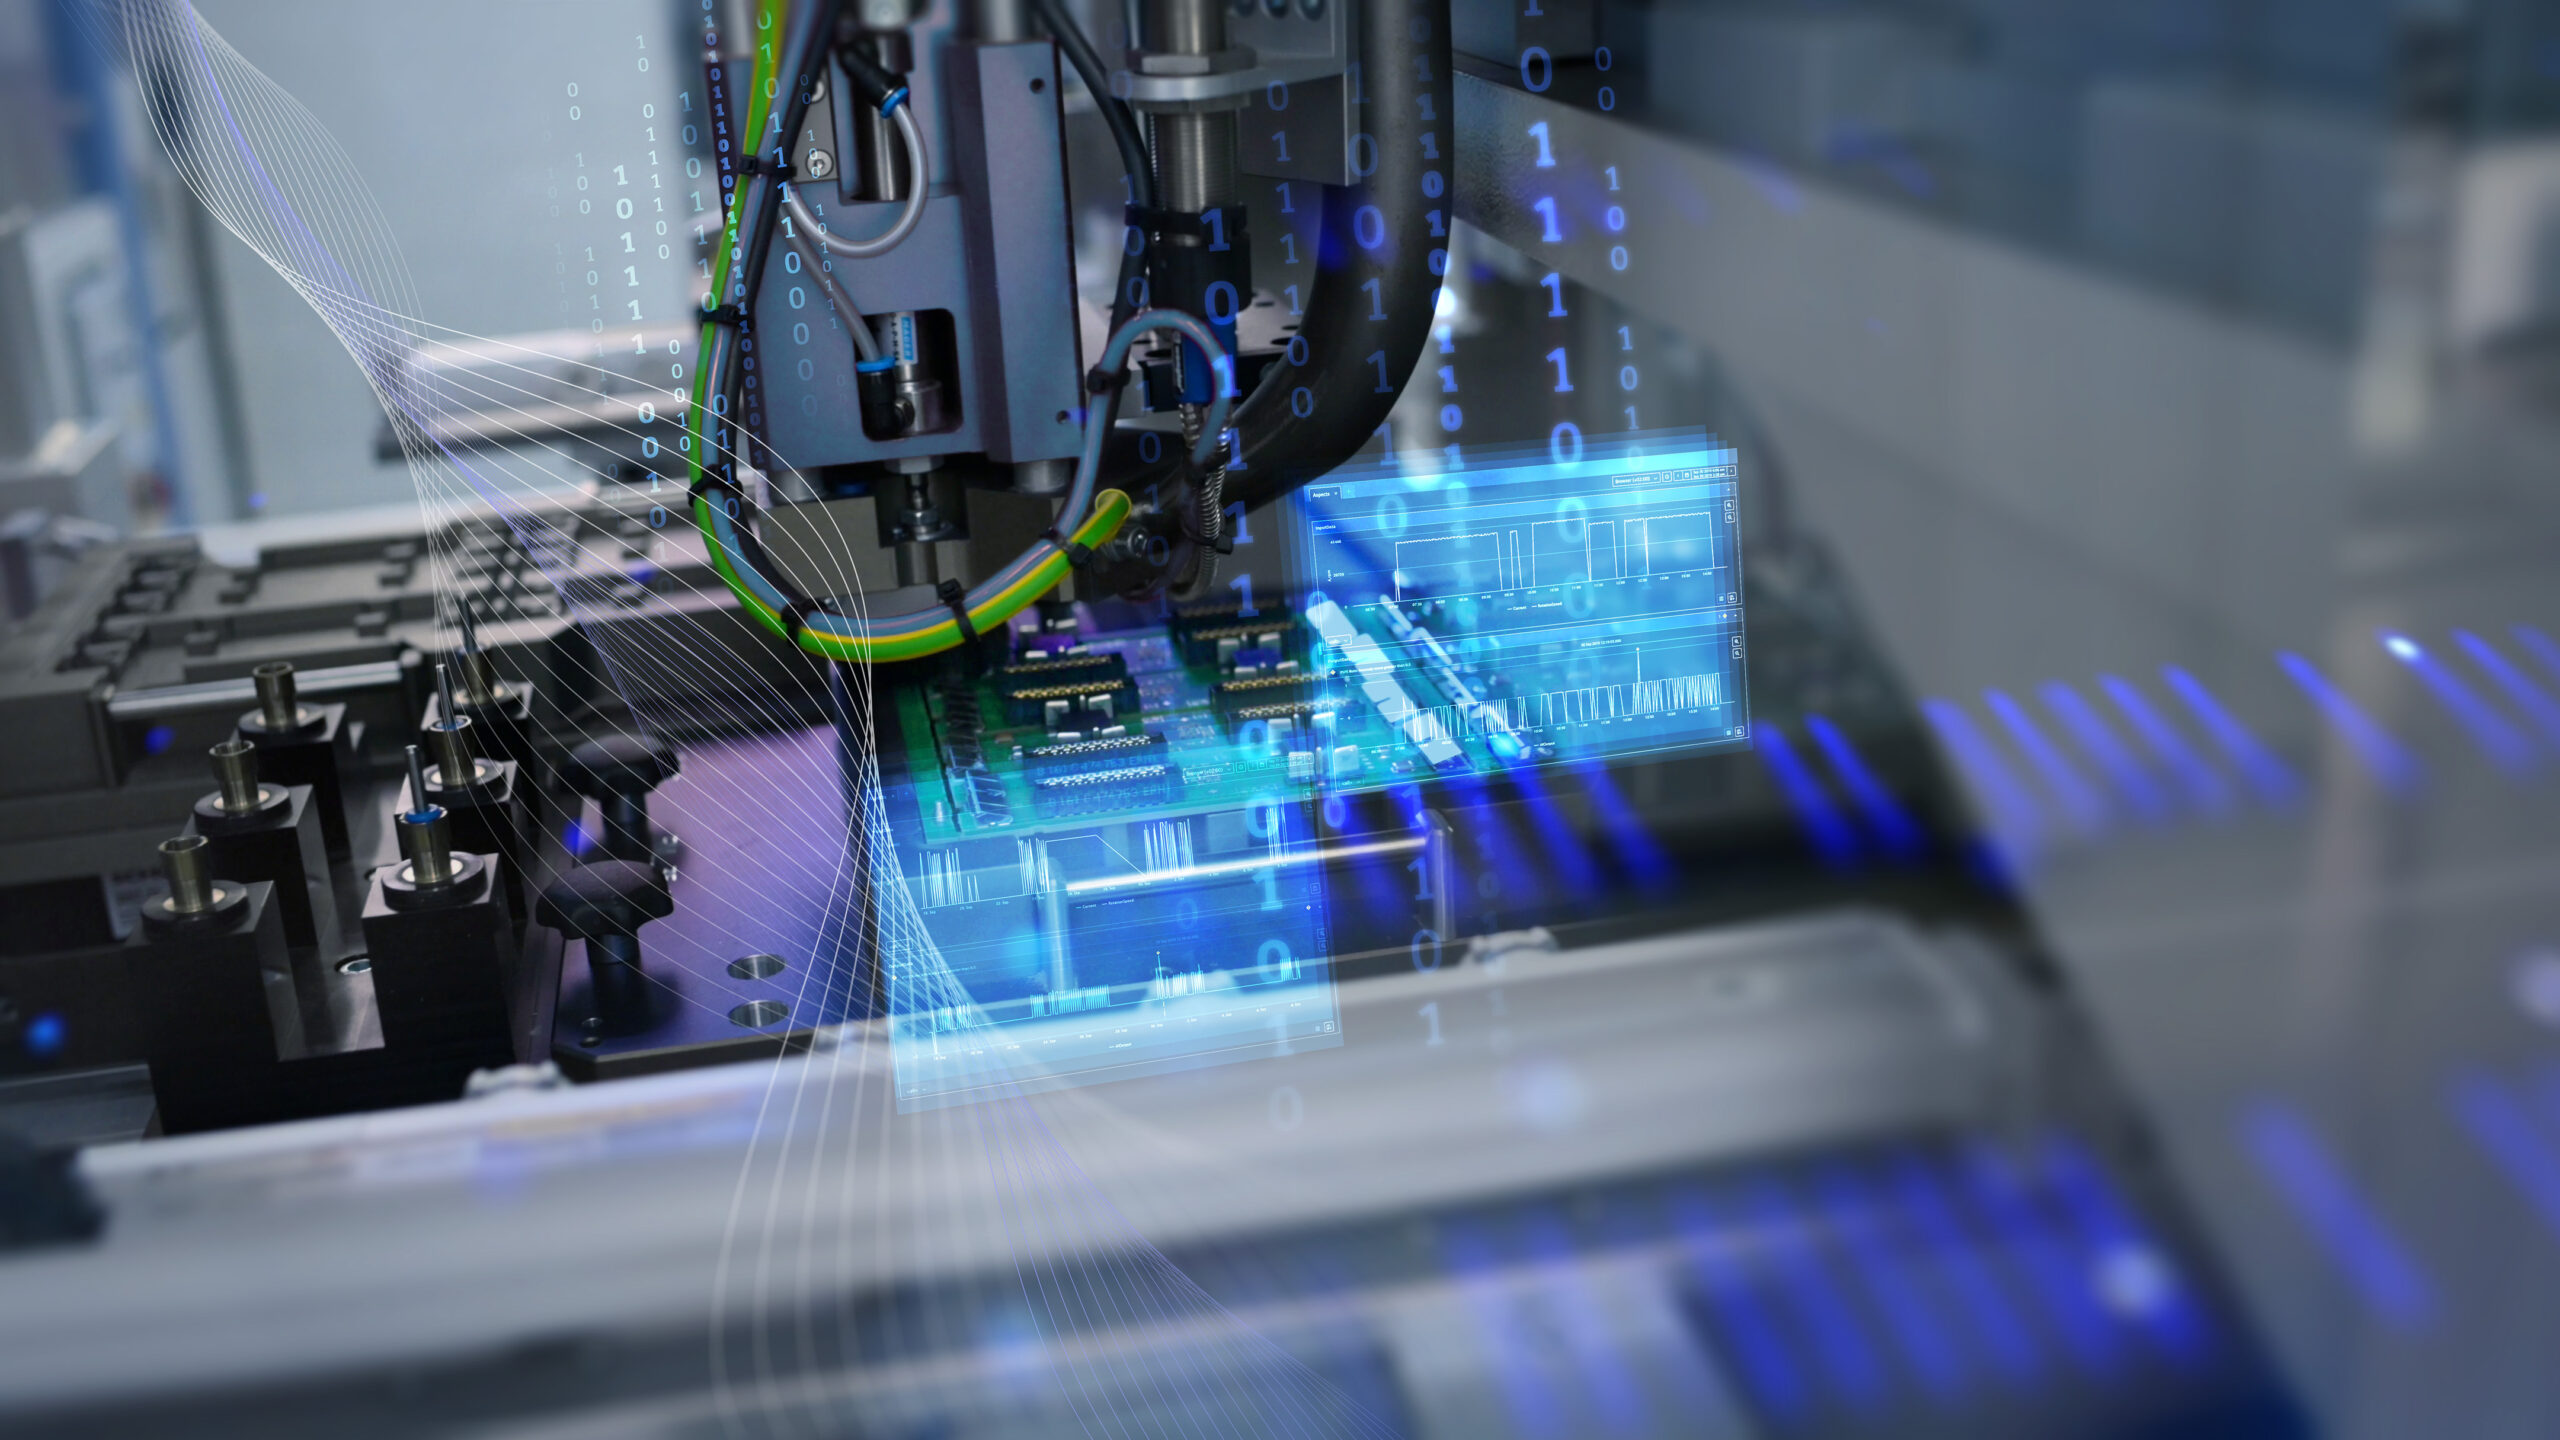 Digital electronics manufacturing process